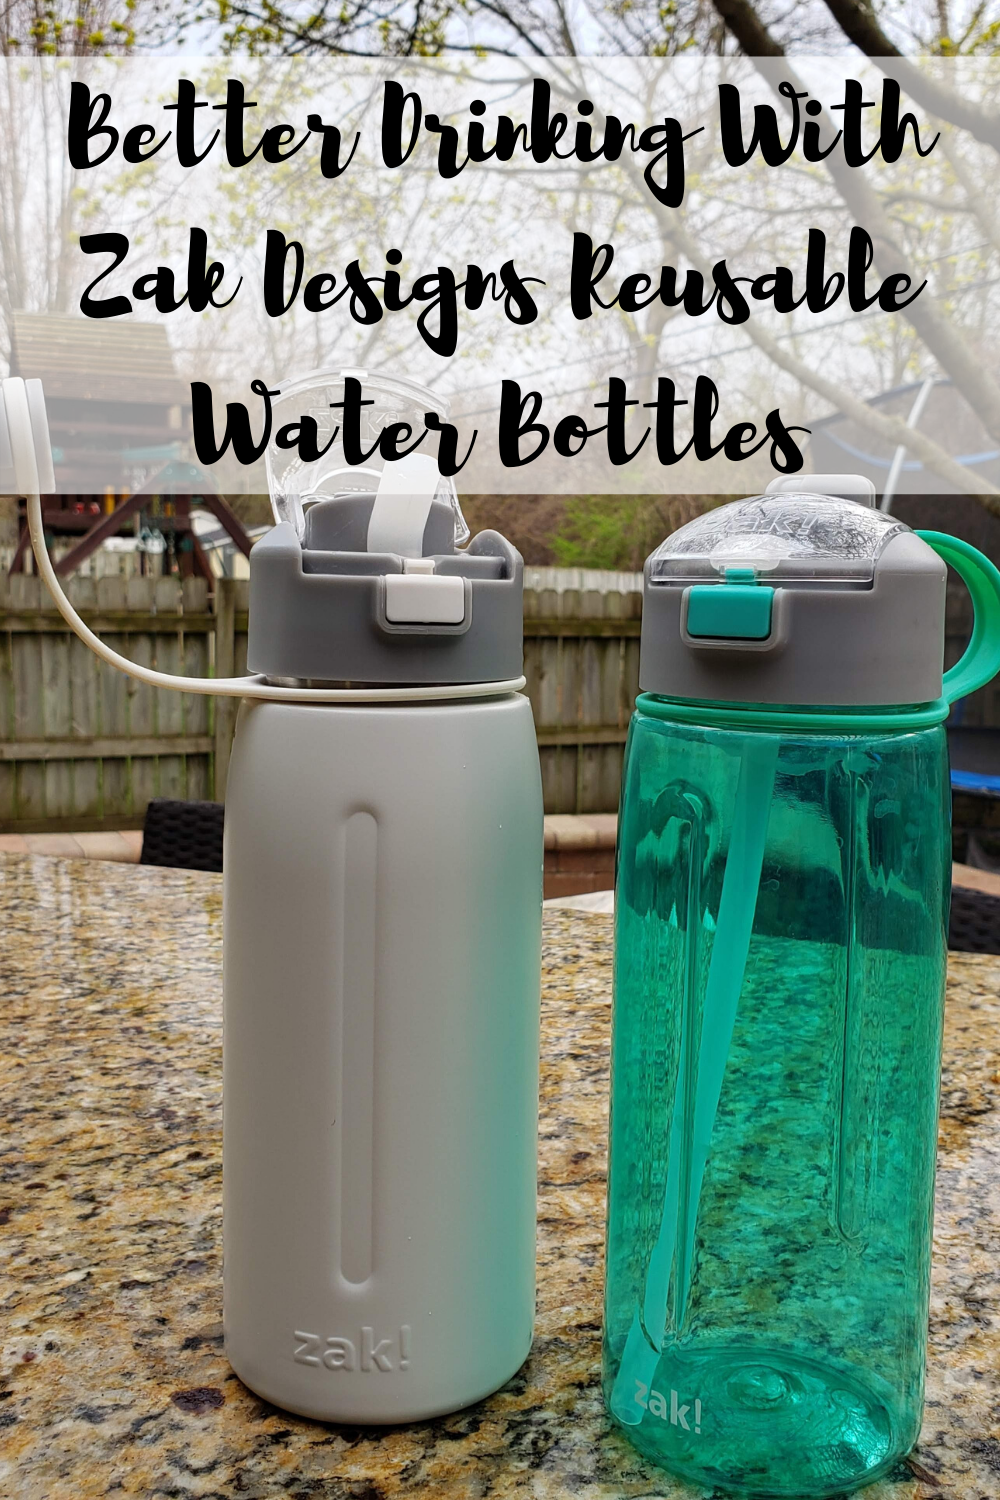 https://momandmore.com/wp-content/uploads/2020/04/Better-Drinking-With-Zak-Designs-Reusable-Water-Bottles.png